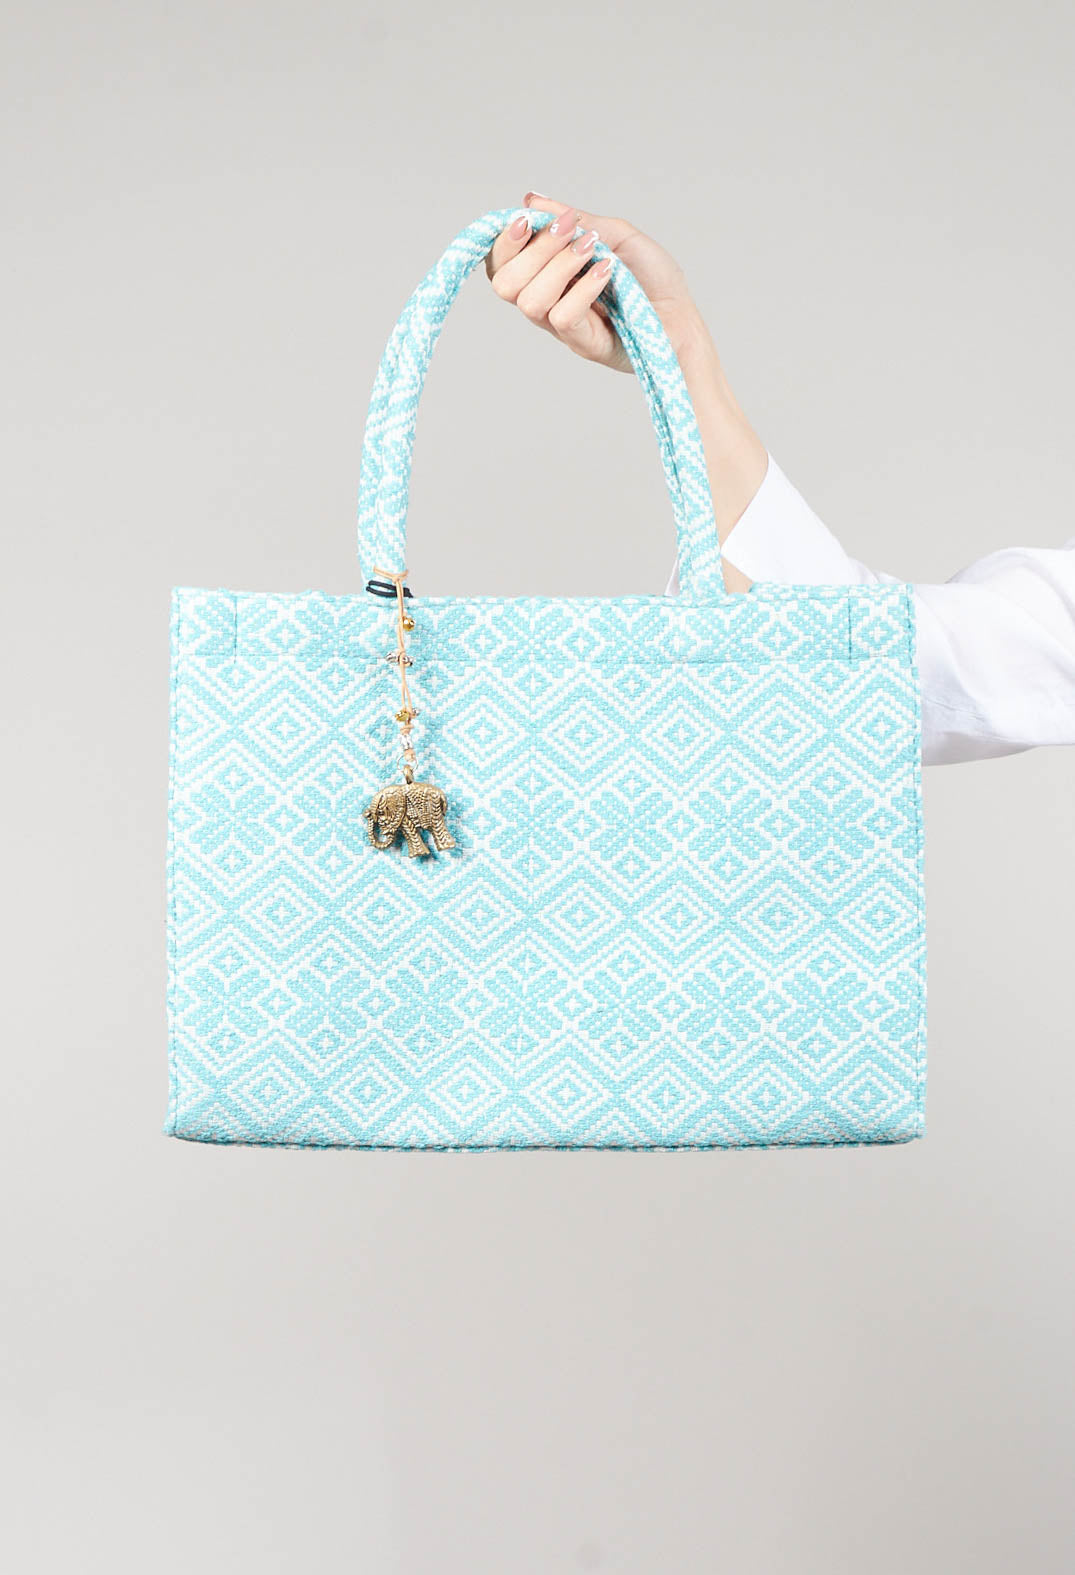 Large Tote Bag with Geometric Print in Ocean Blue